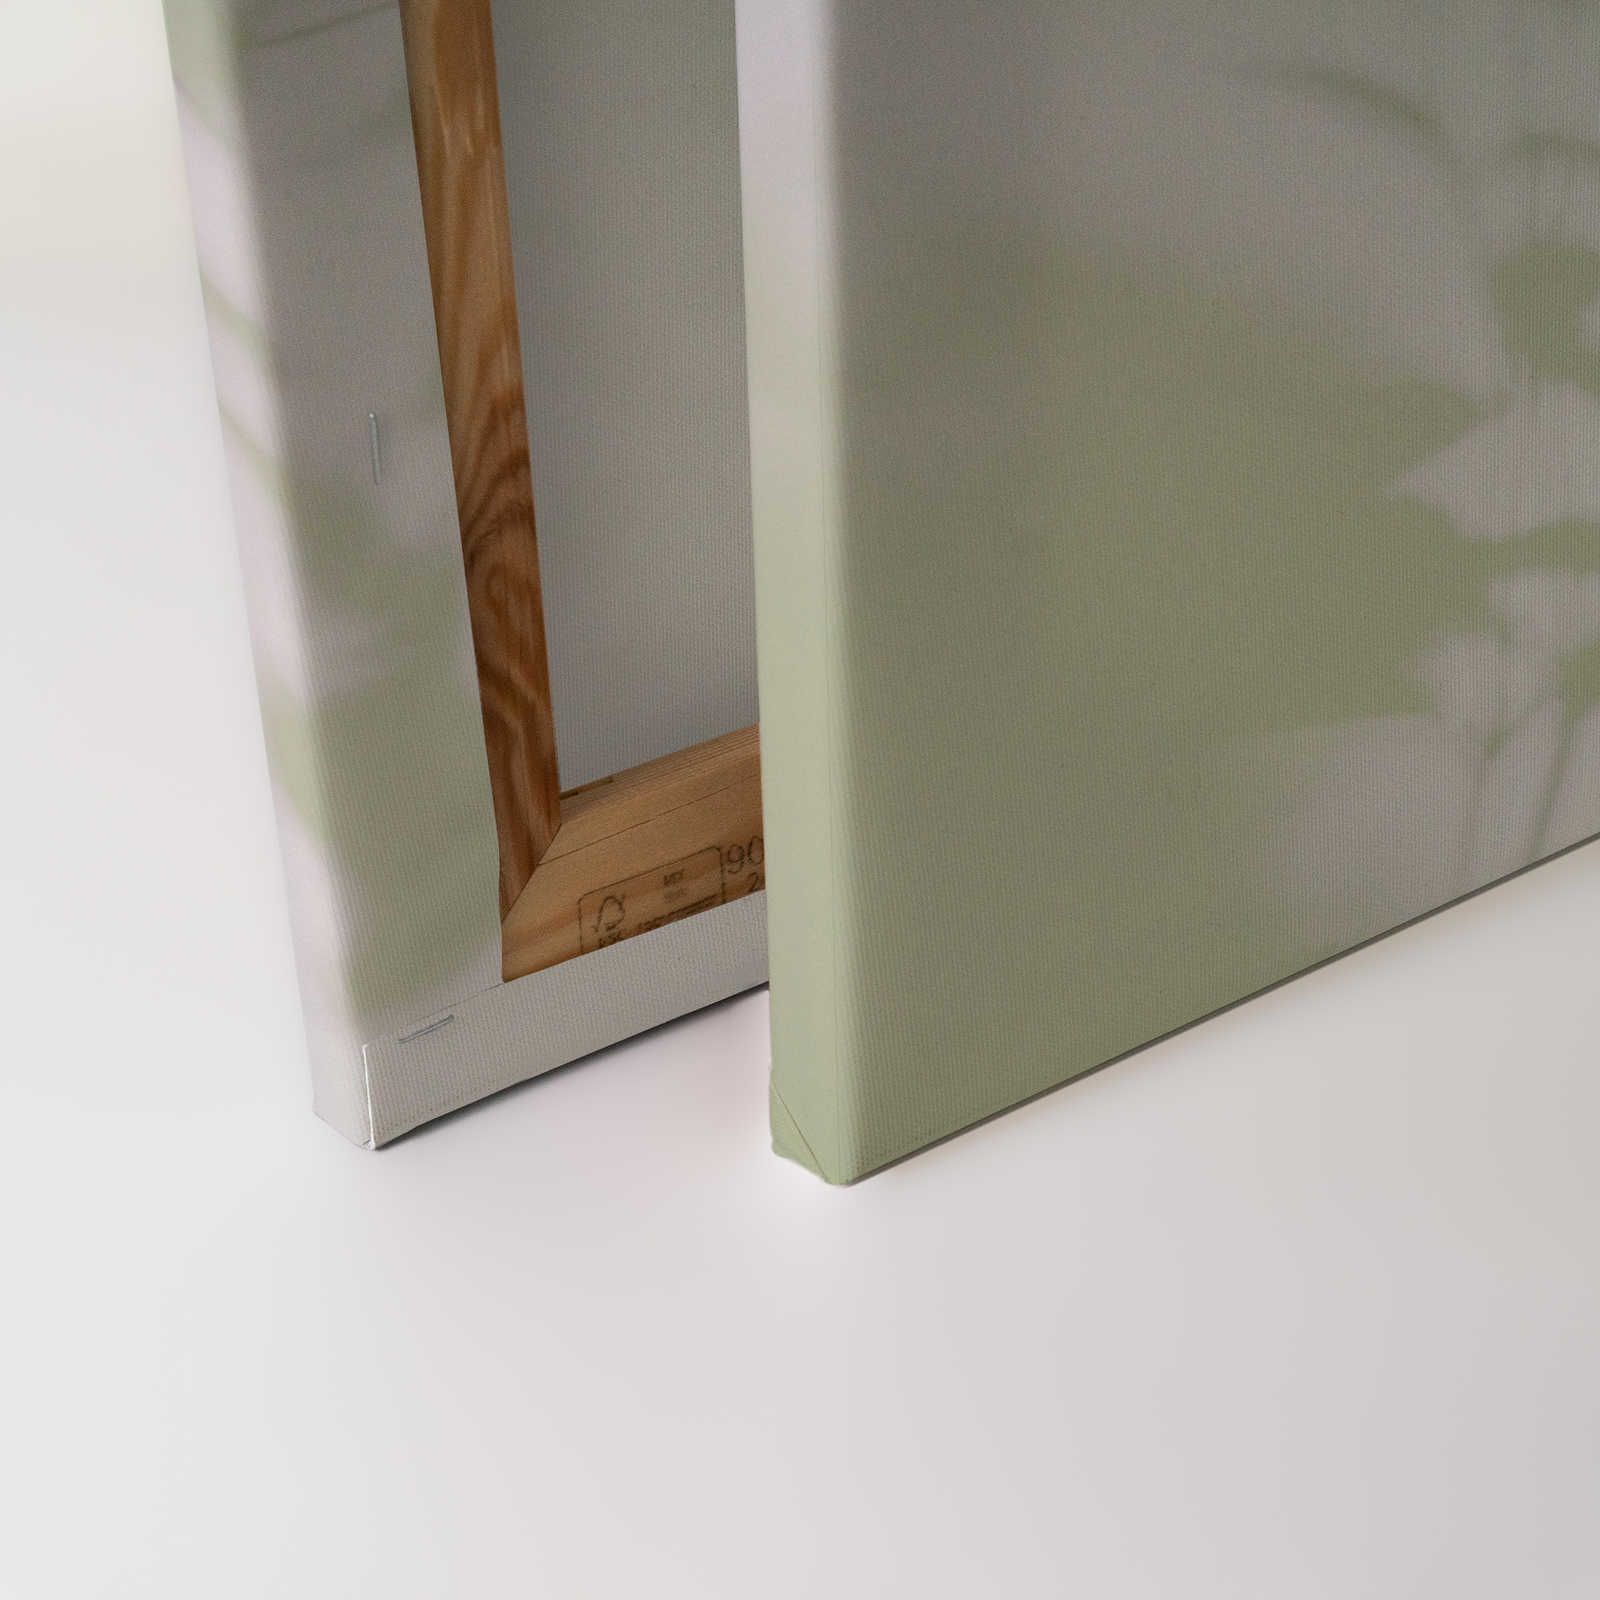             Shadow Room 3 - Natur Leinwandbild Grün & Weiß, verblasstes Design – 0,90 m x 0,60 m
        